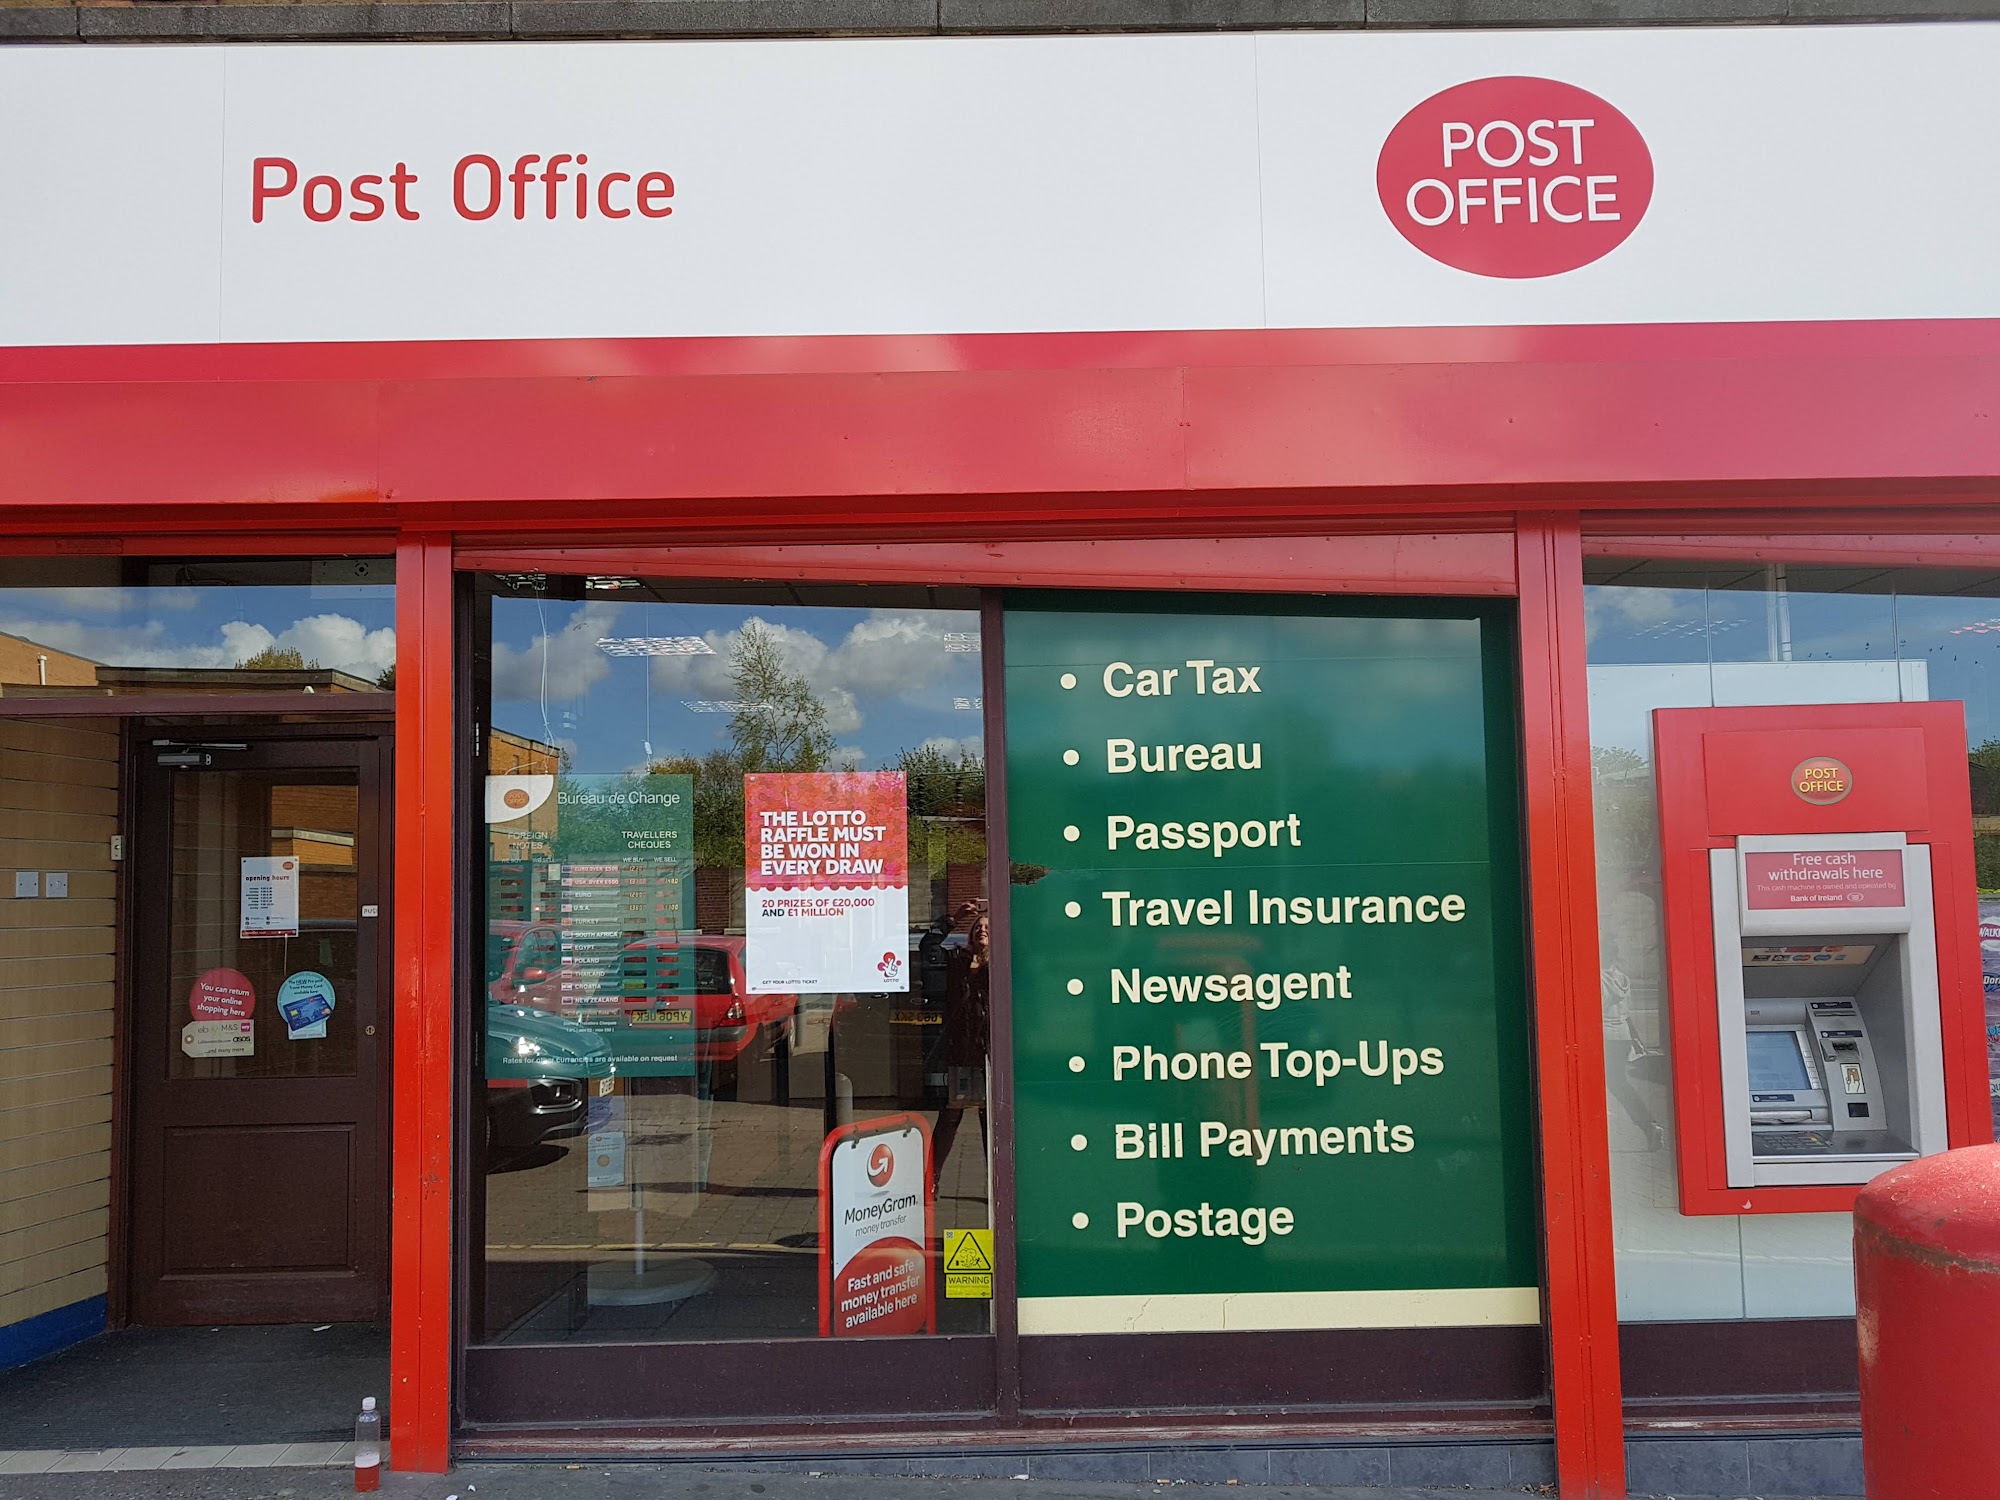 Post Office Ltd